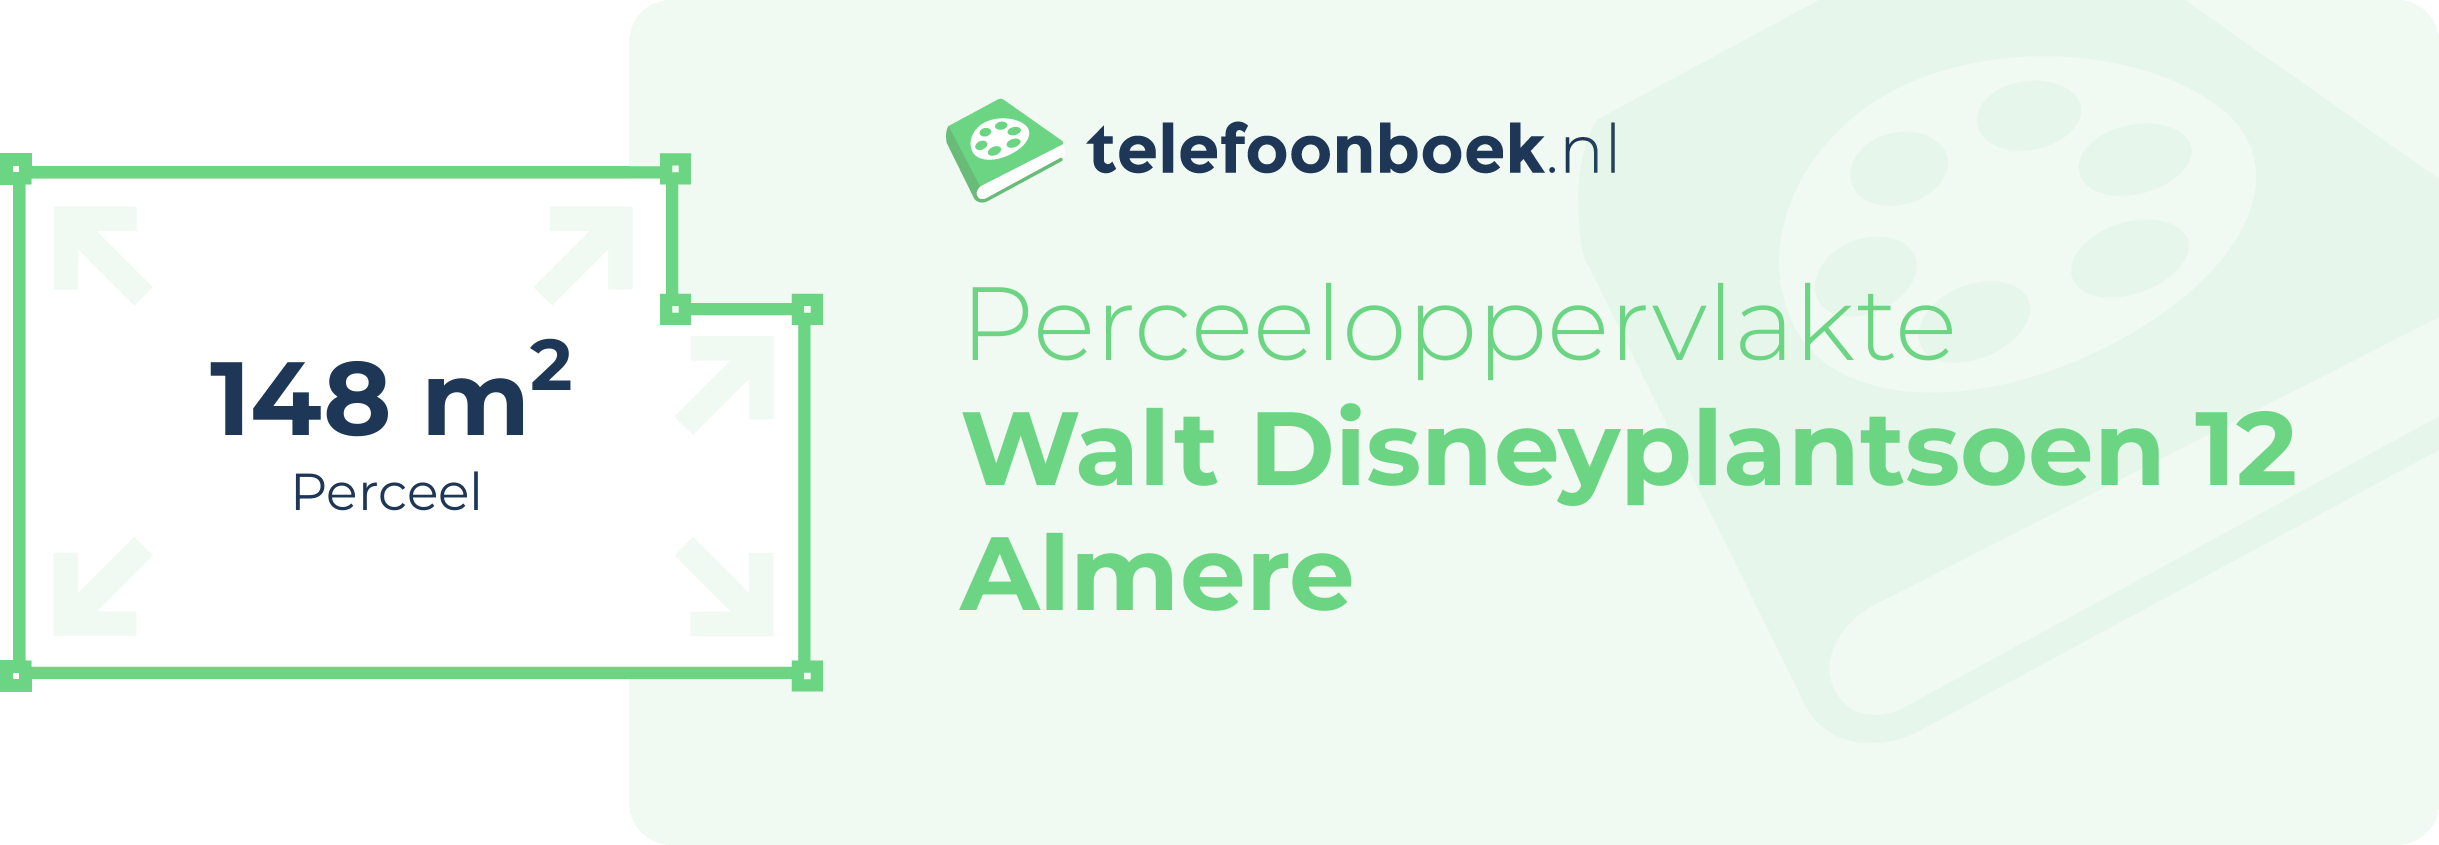 Perceeloppervlakte Walt Disneyplantsoen 12 Almere